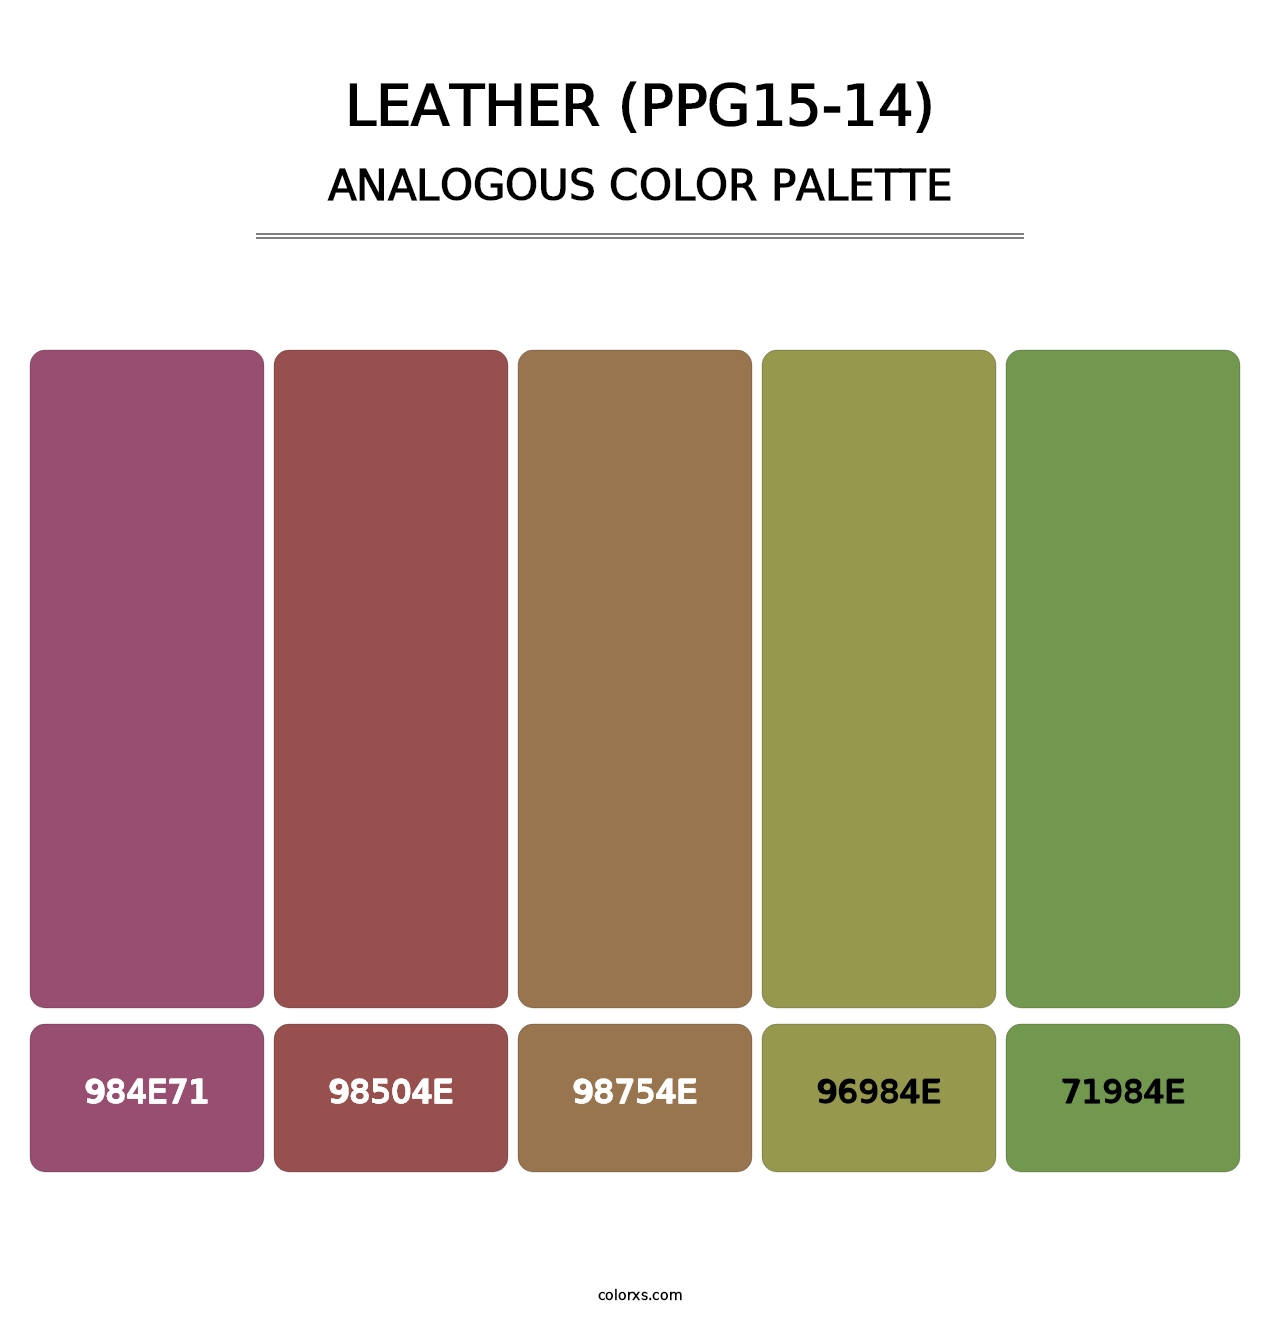 Leather (PPG15-14) - Analogous Color Palette